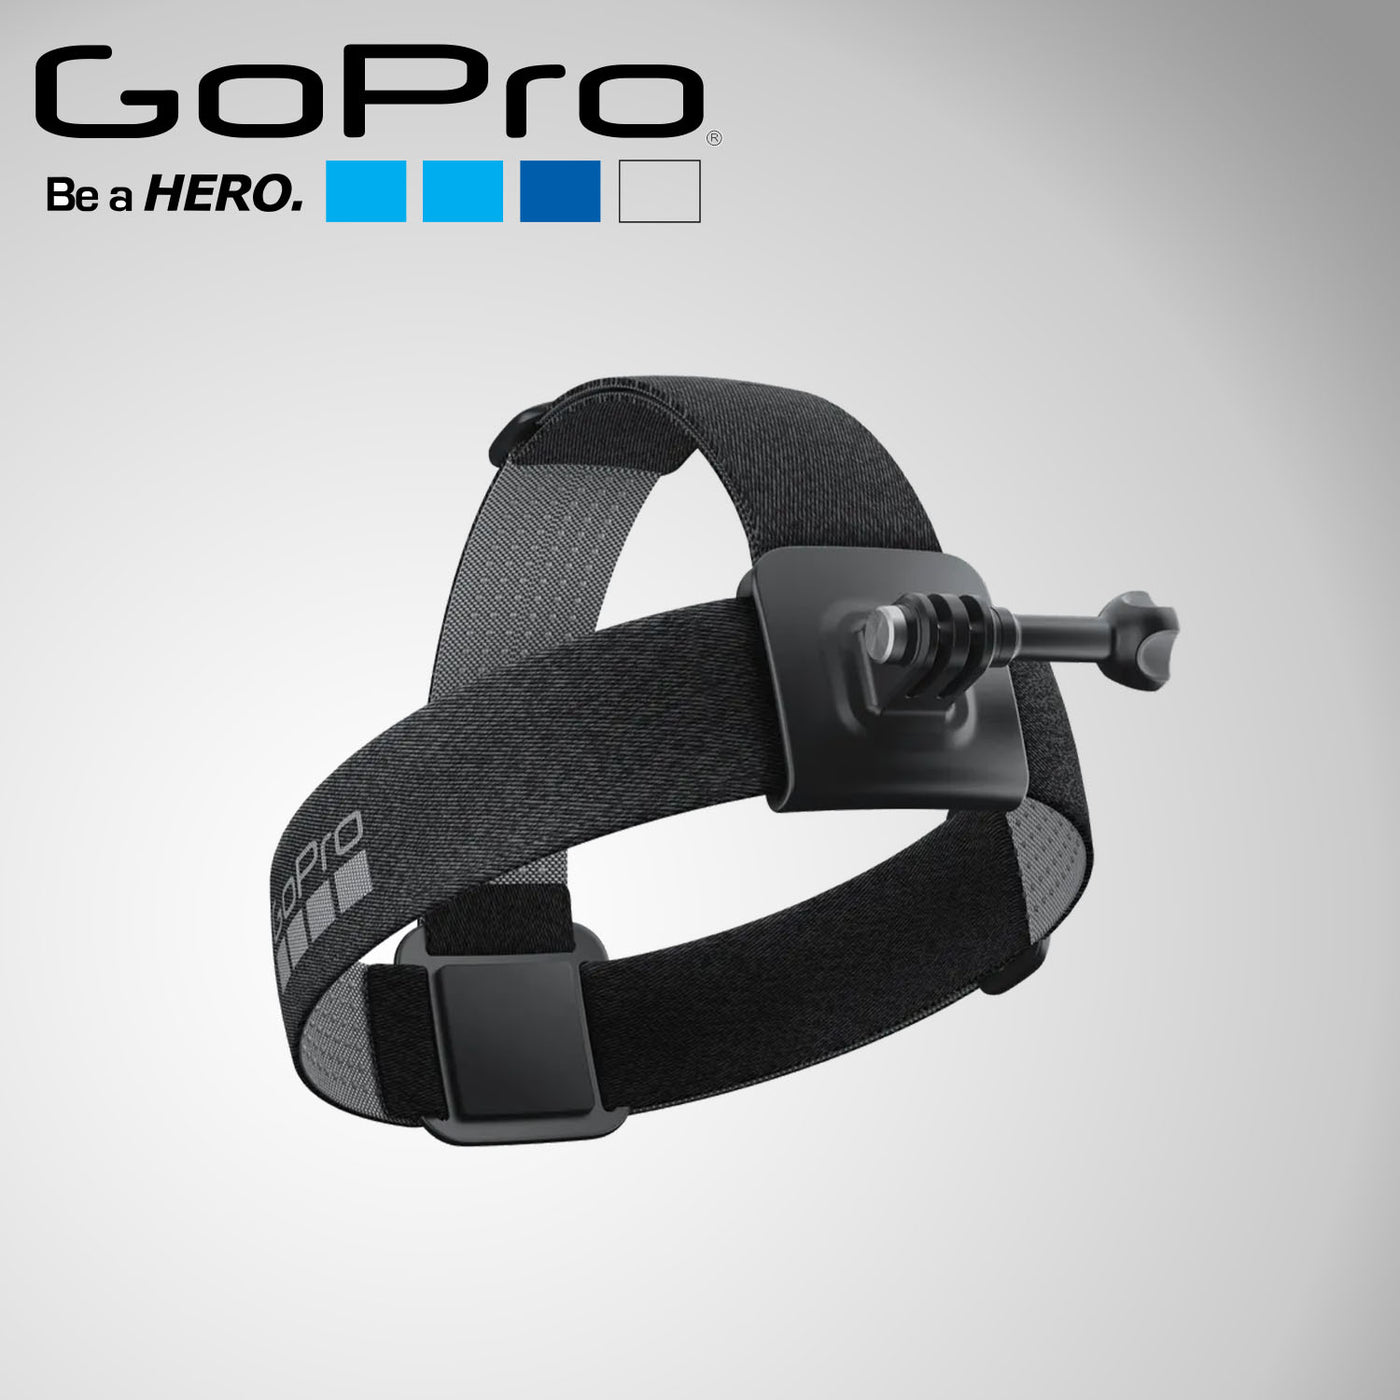 GoPro Head Strap 2.0 (montaje de cabeza de cámara de acción + clip) - Accesorio oficial